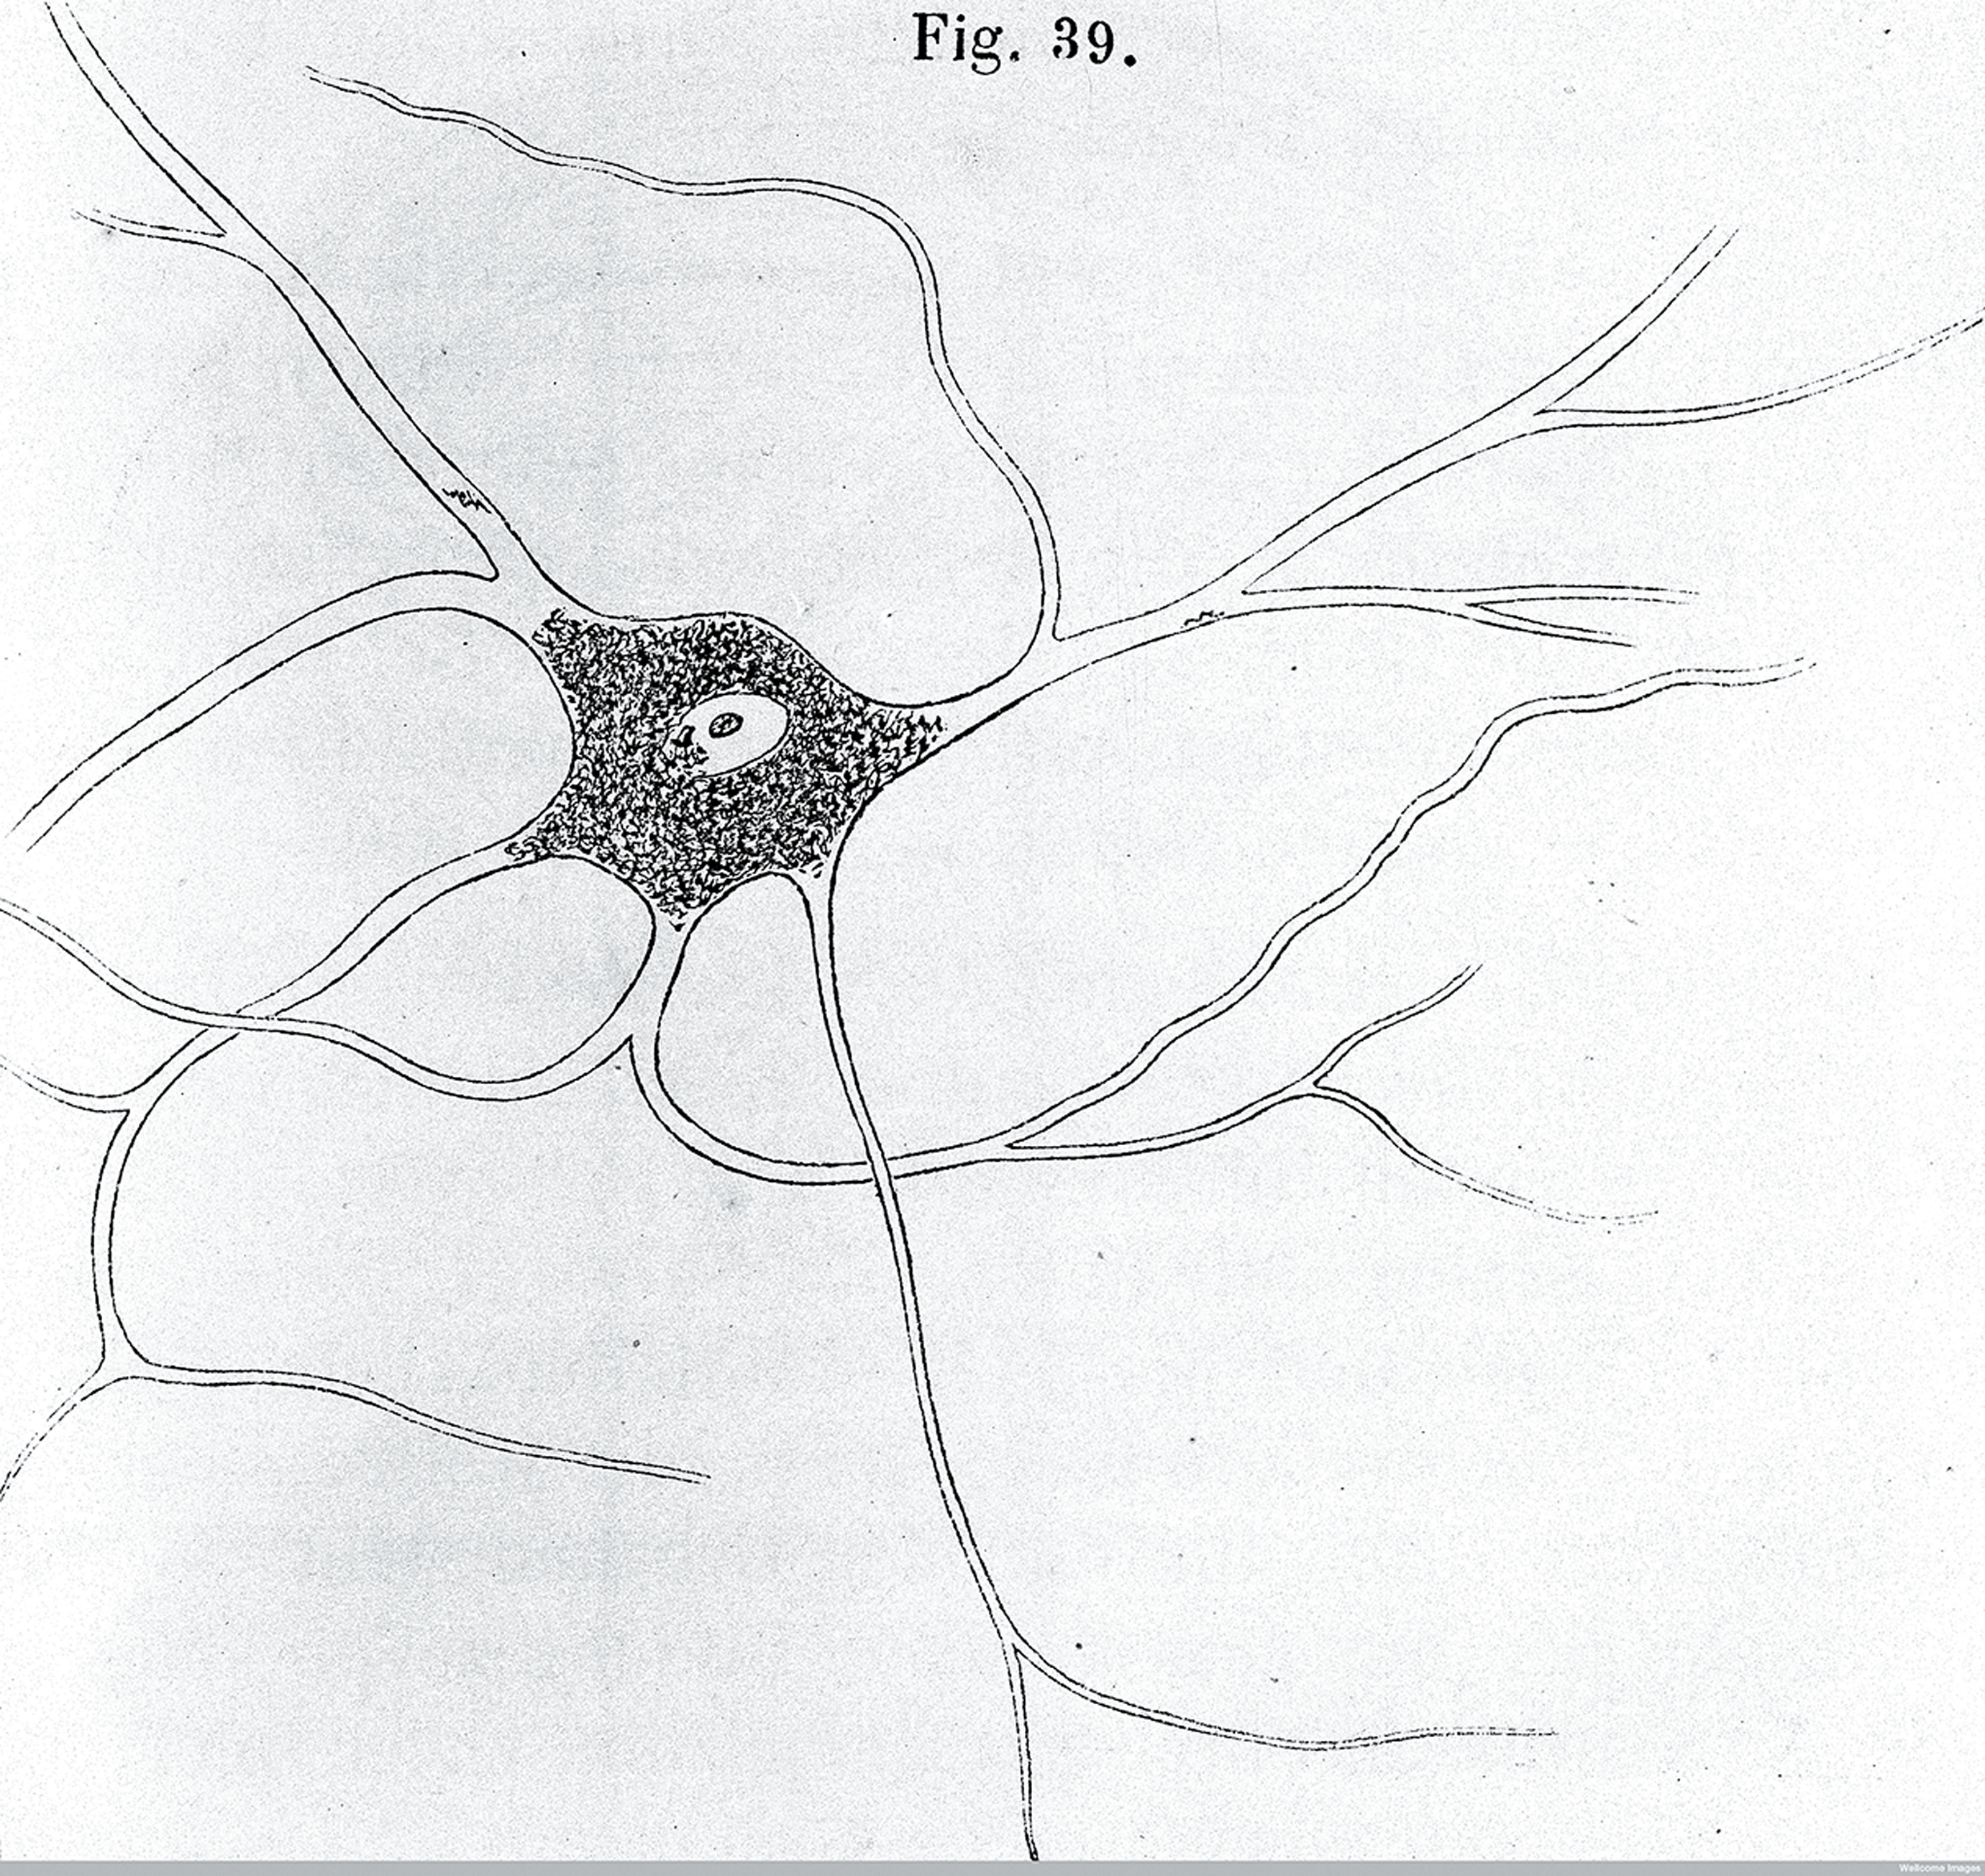 A nerve (A. von Kolliker, 1852).